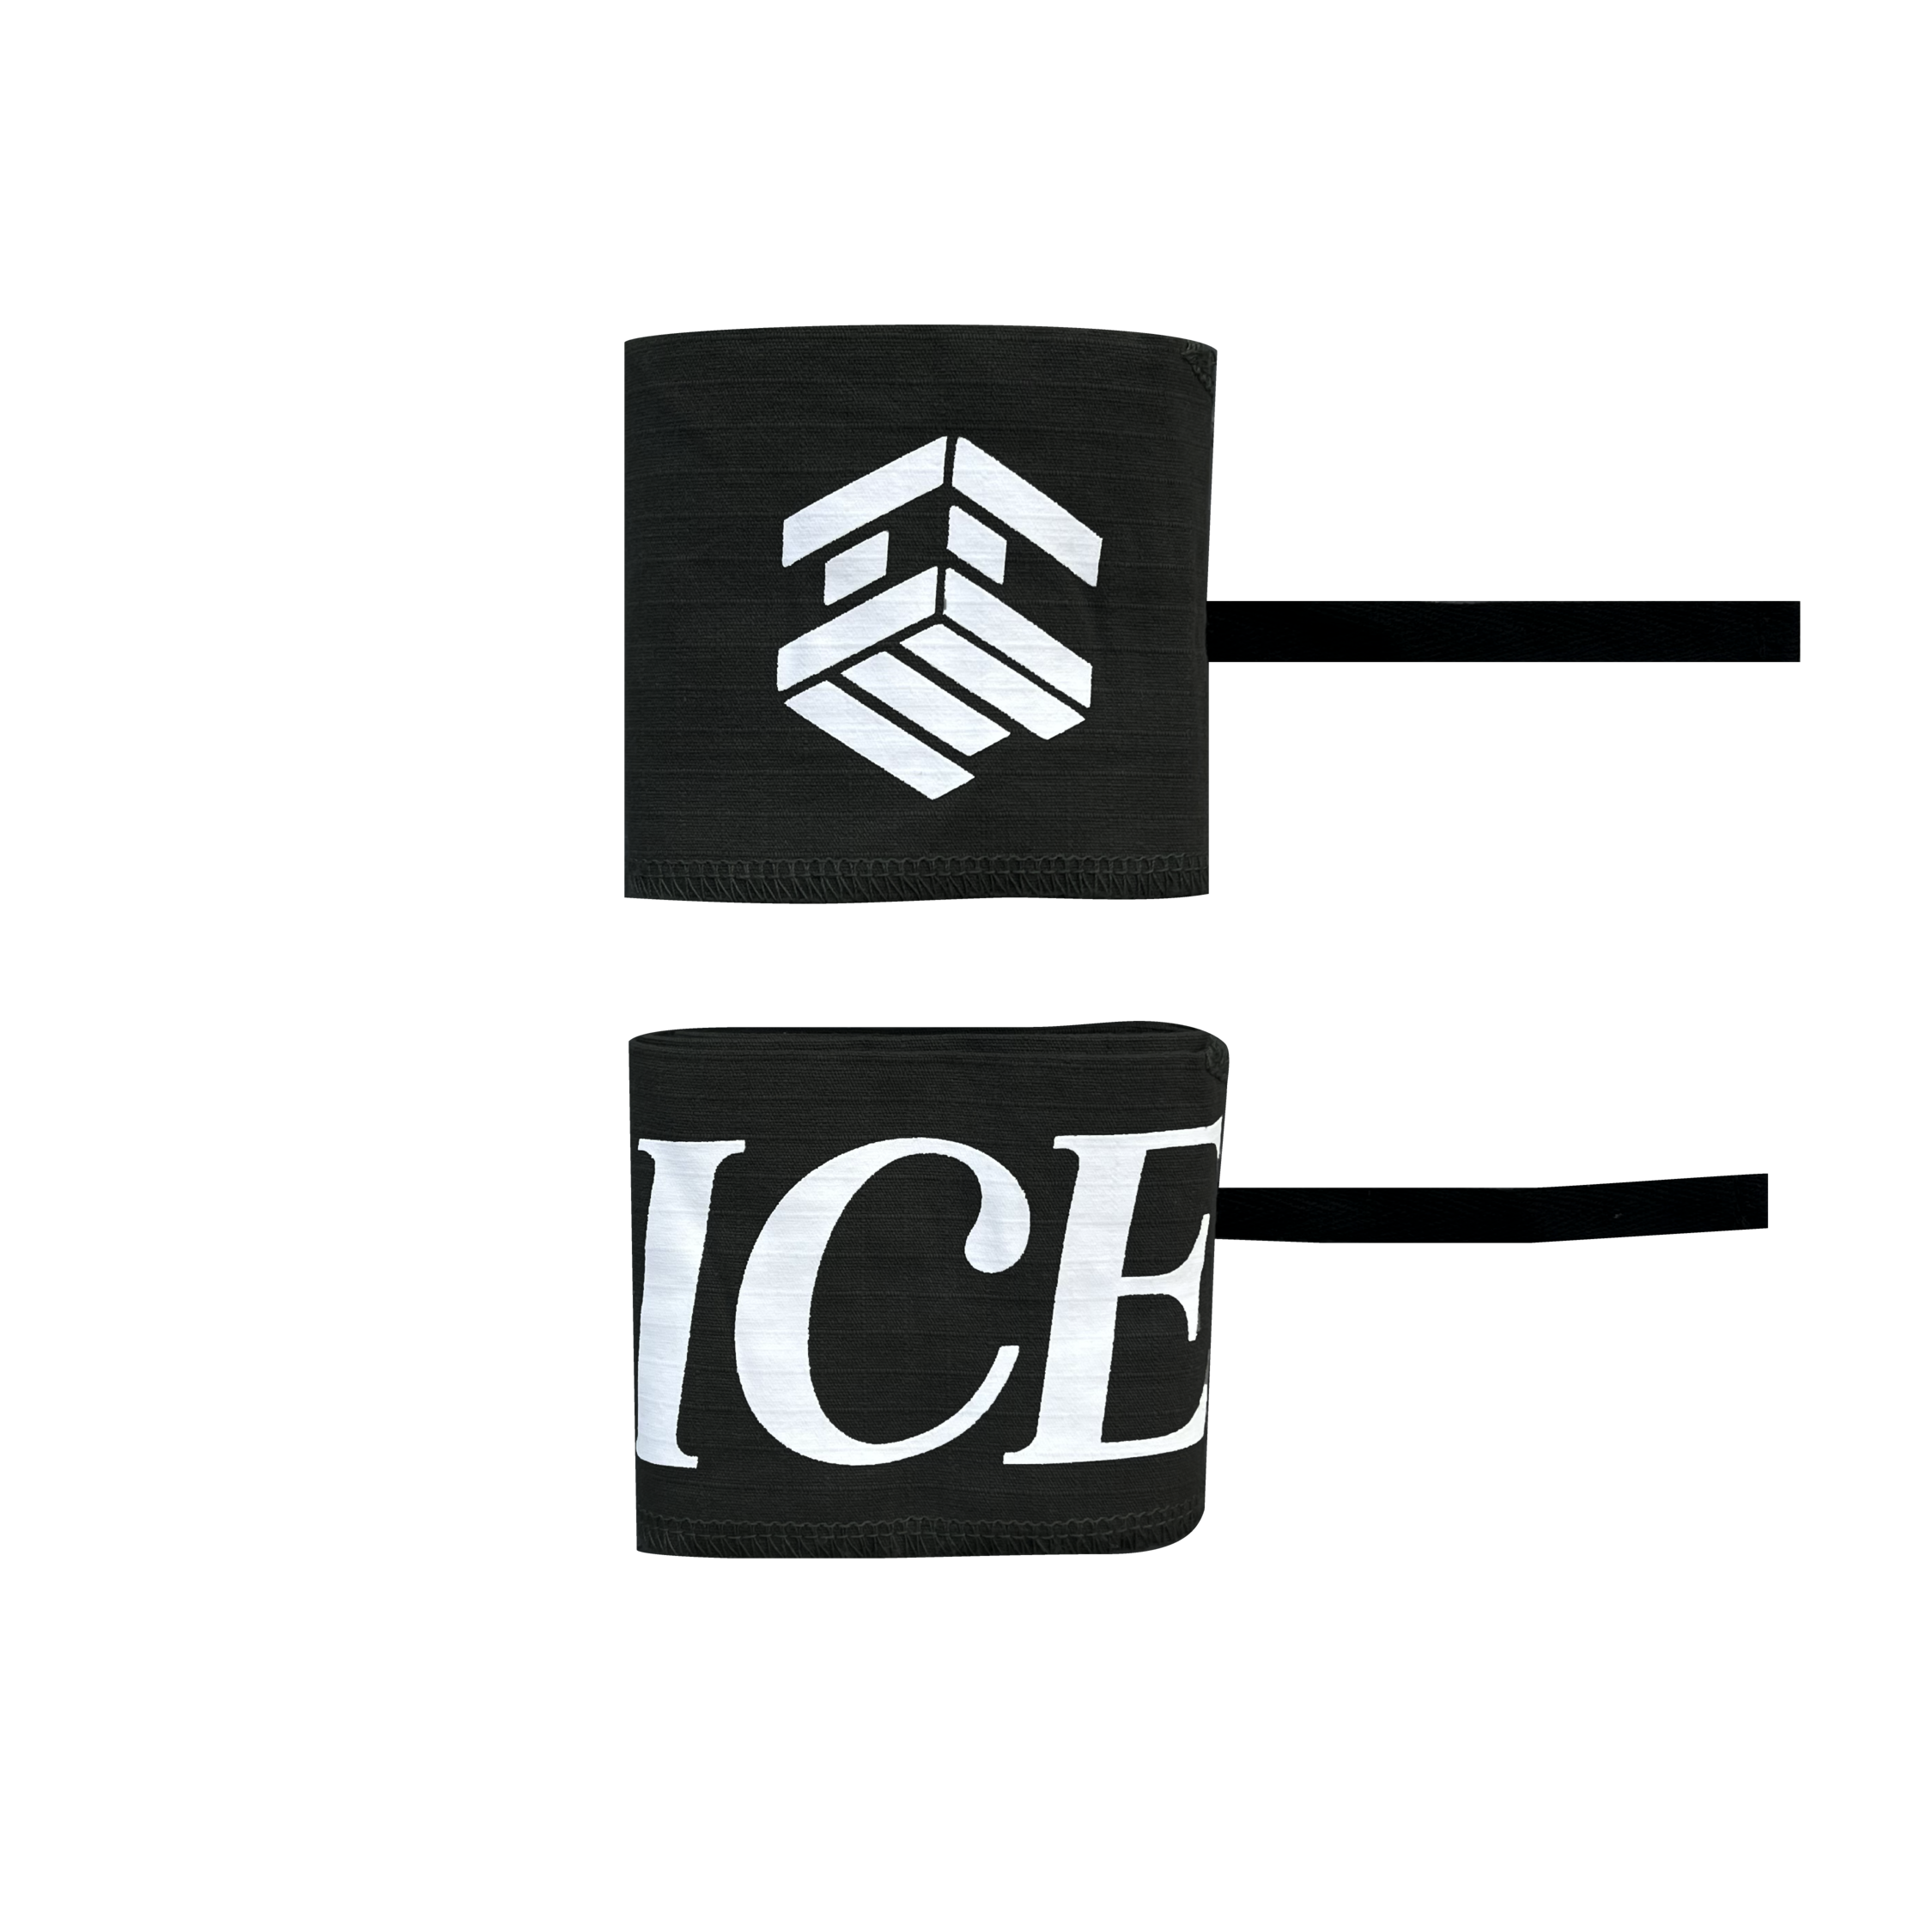 THE ICE WRIST WRAPS - BLACK